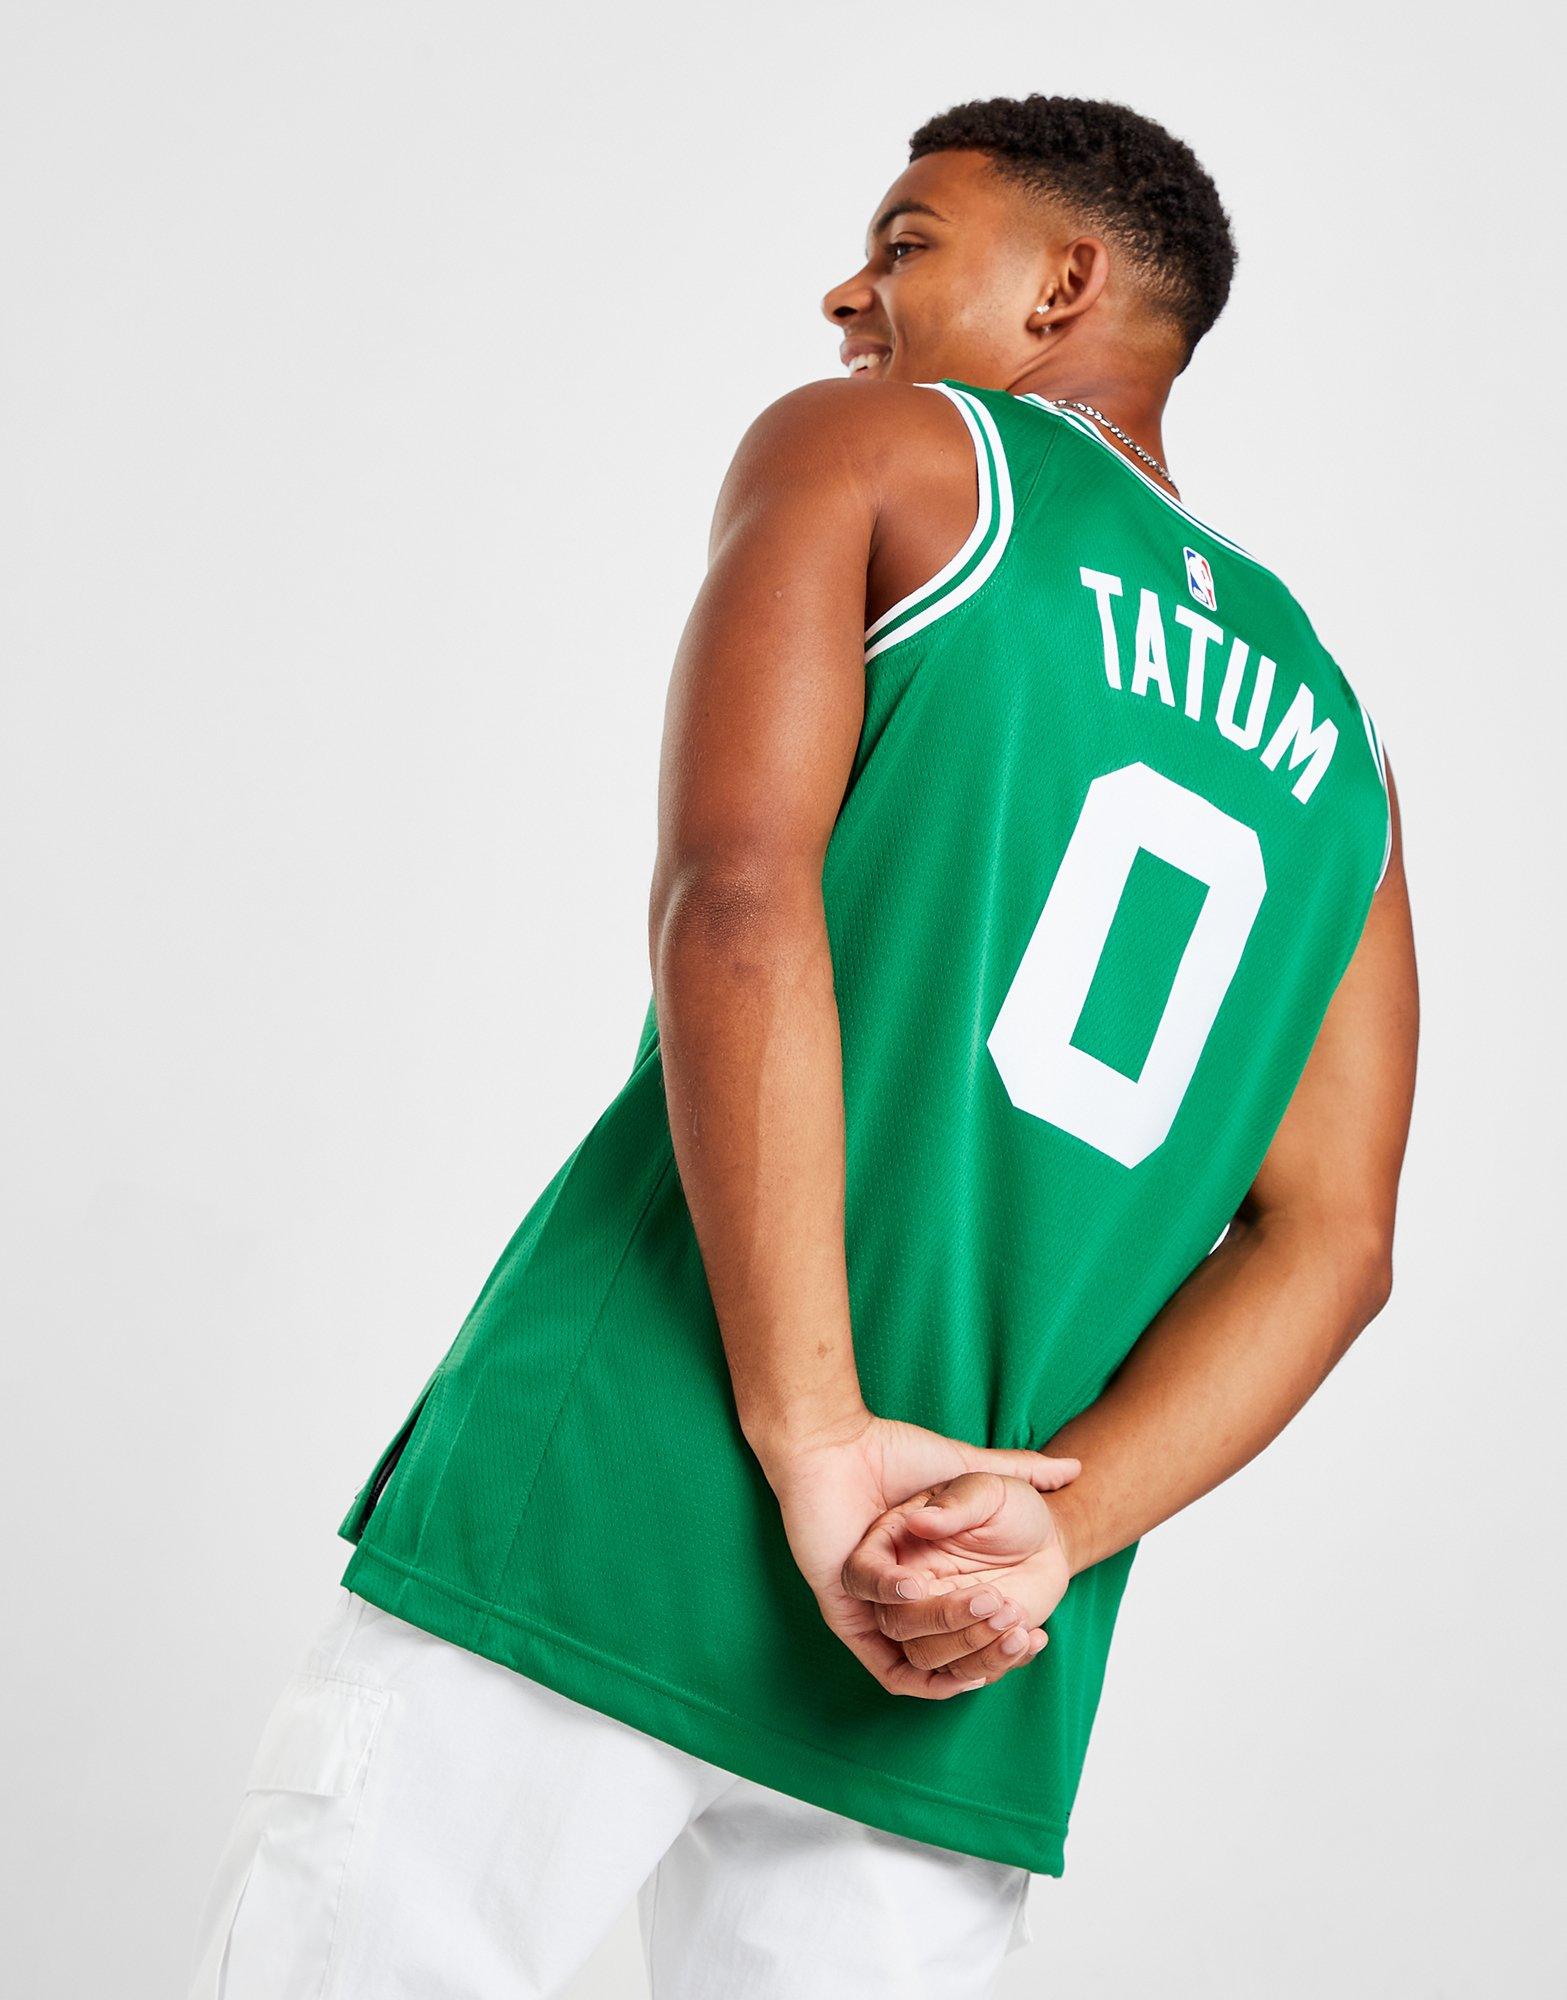 Green Nike NBA Boston Celtics Swingman Tatum #0 Jersey